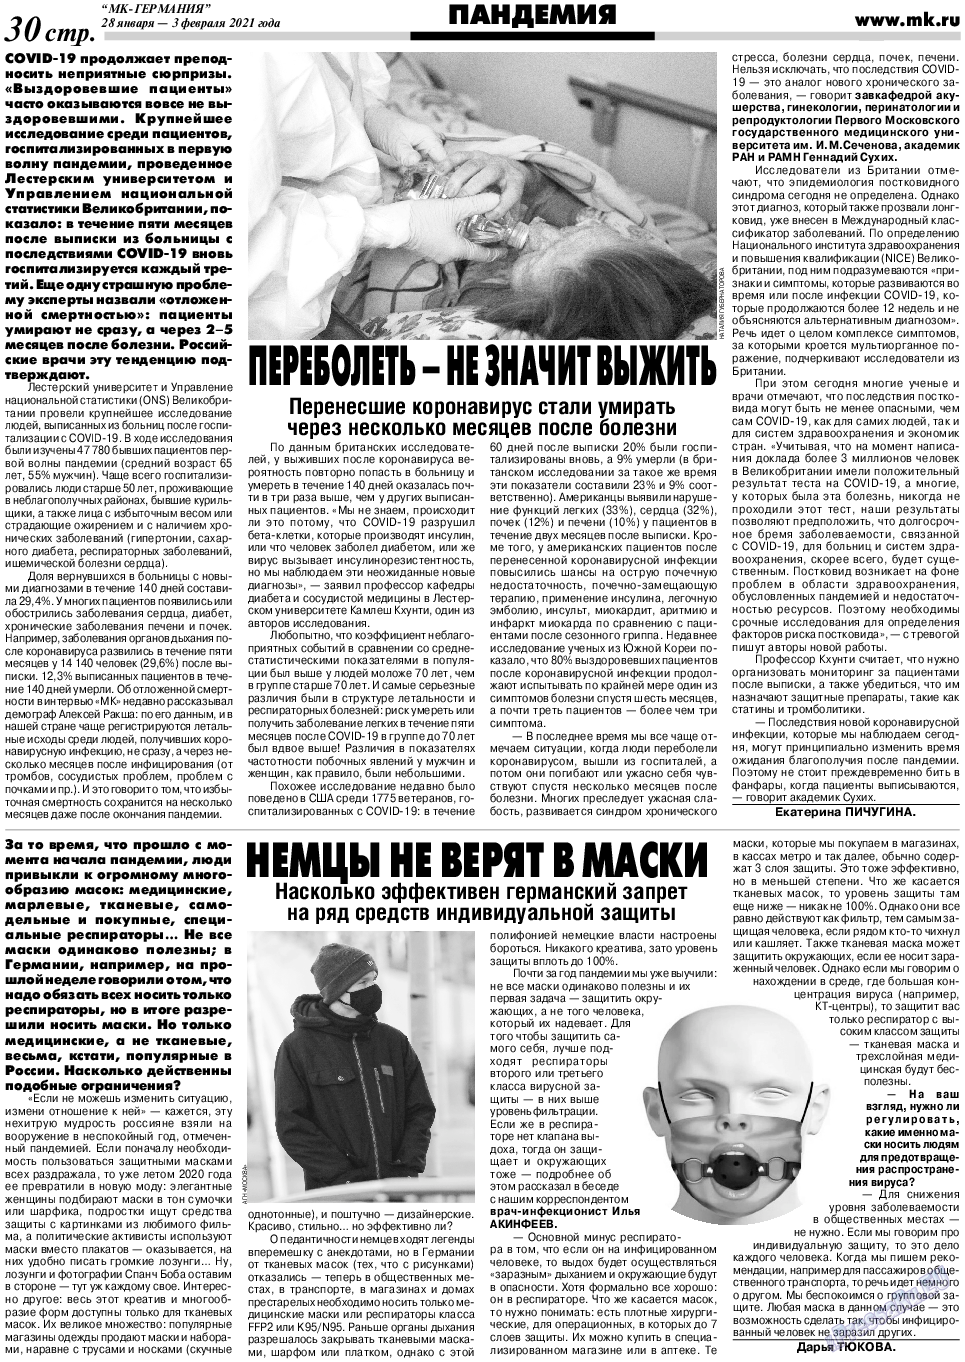 МК-Германия, газета. 2021 №5 стр.30